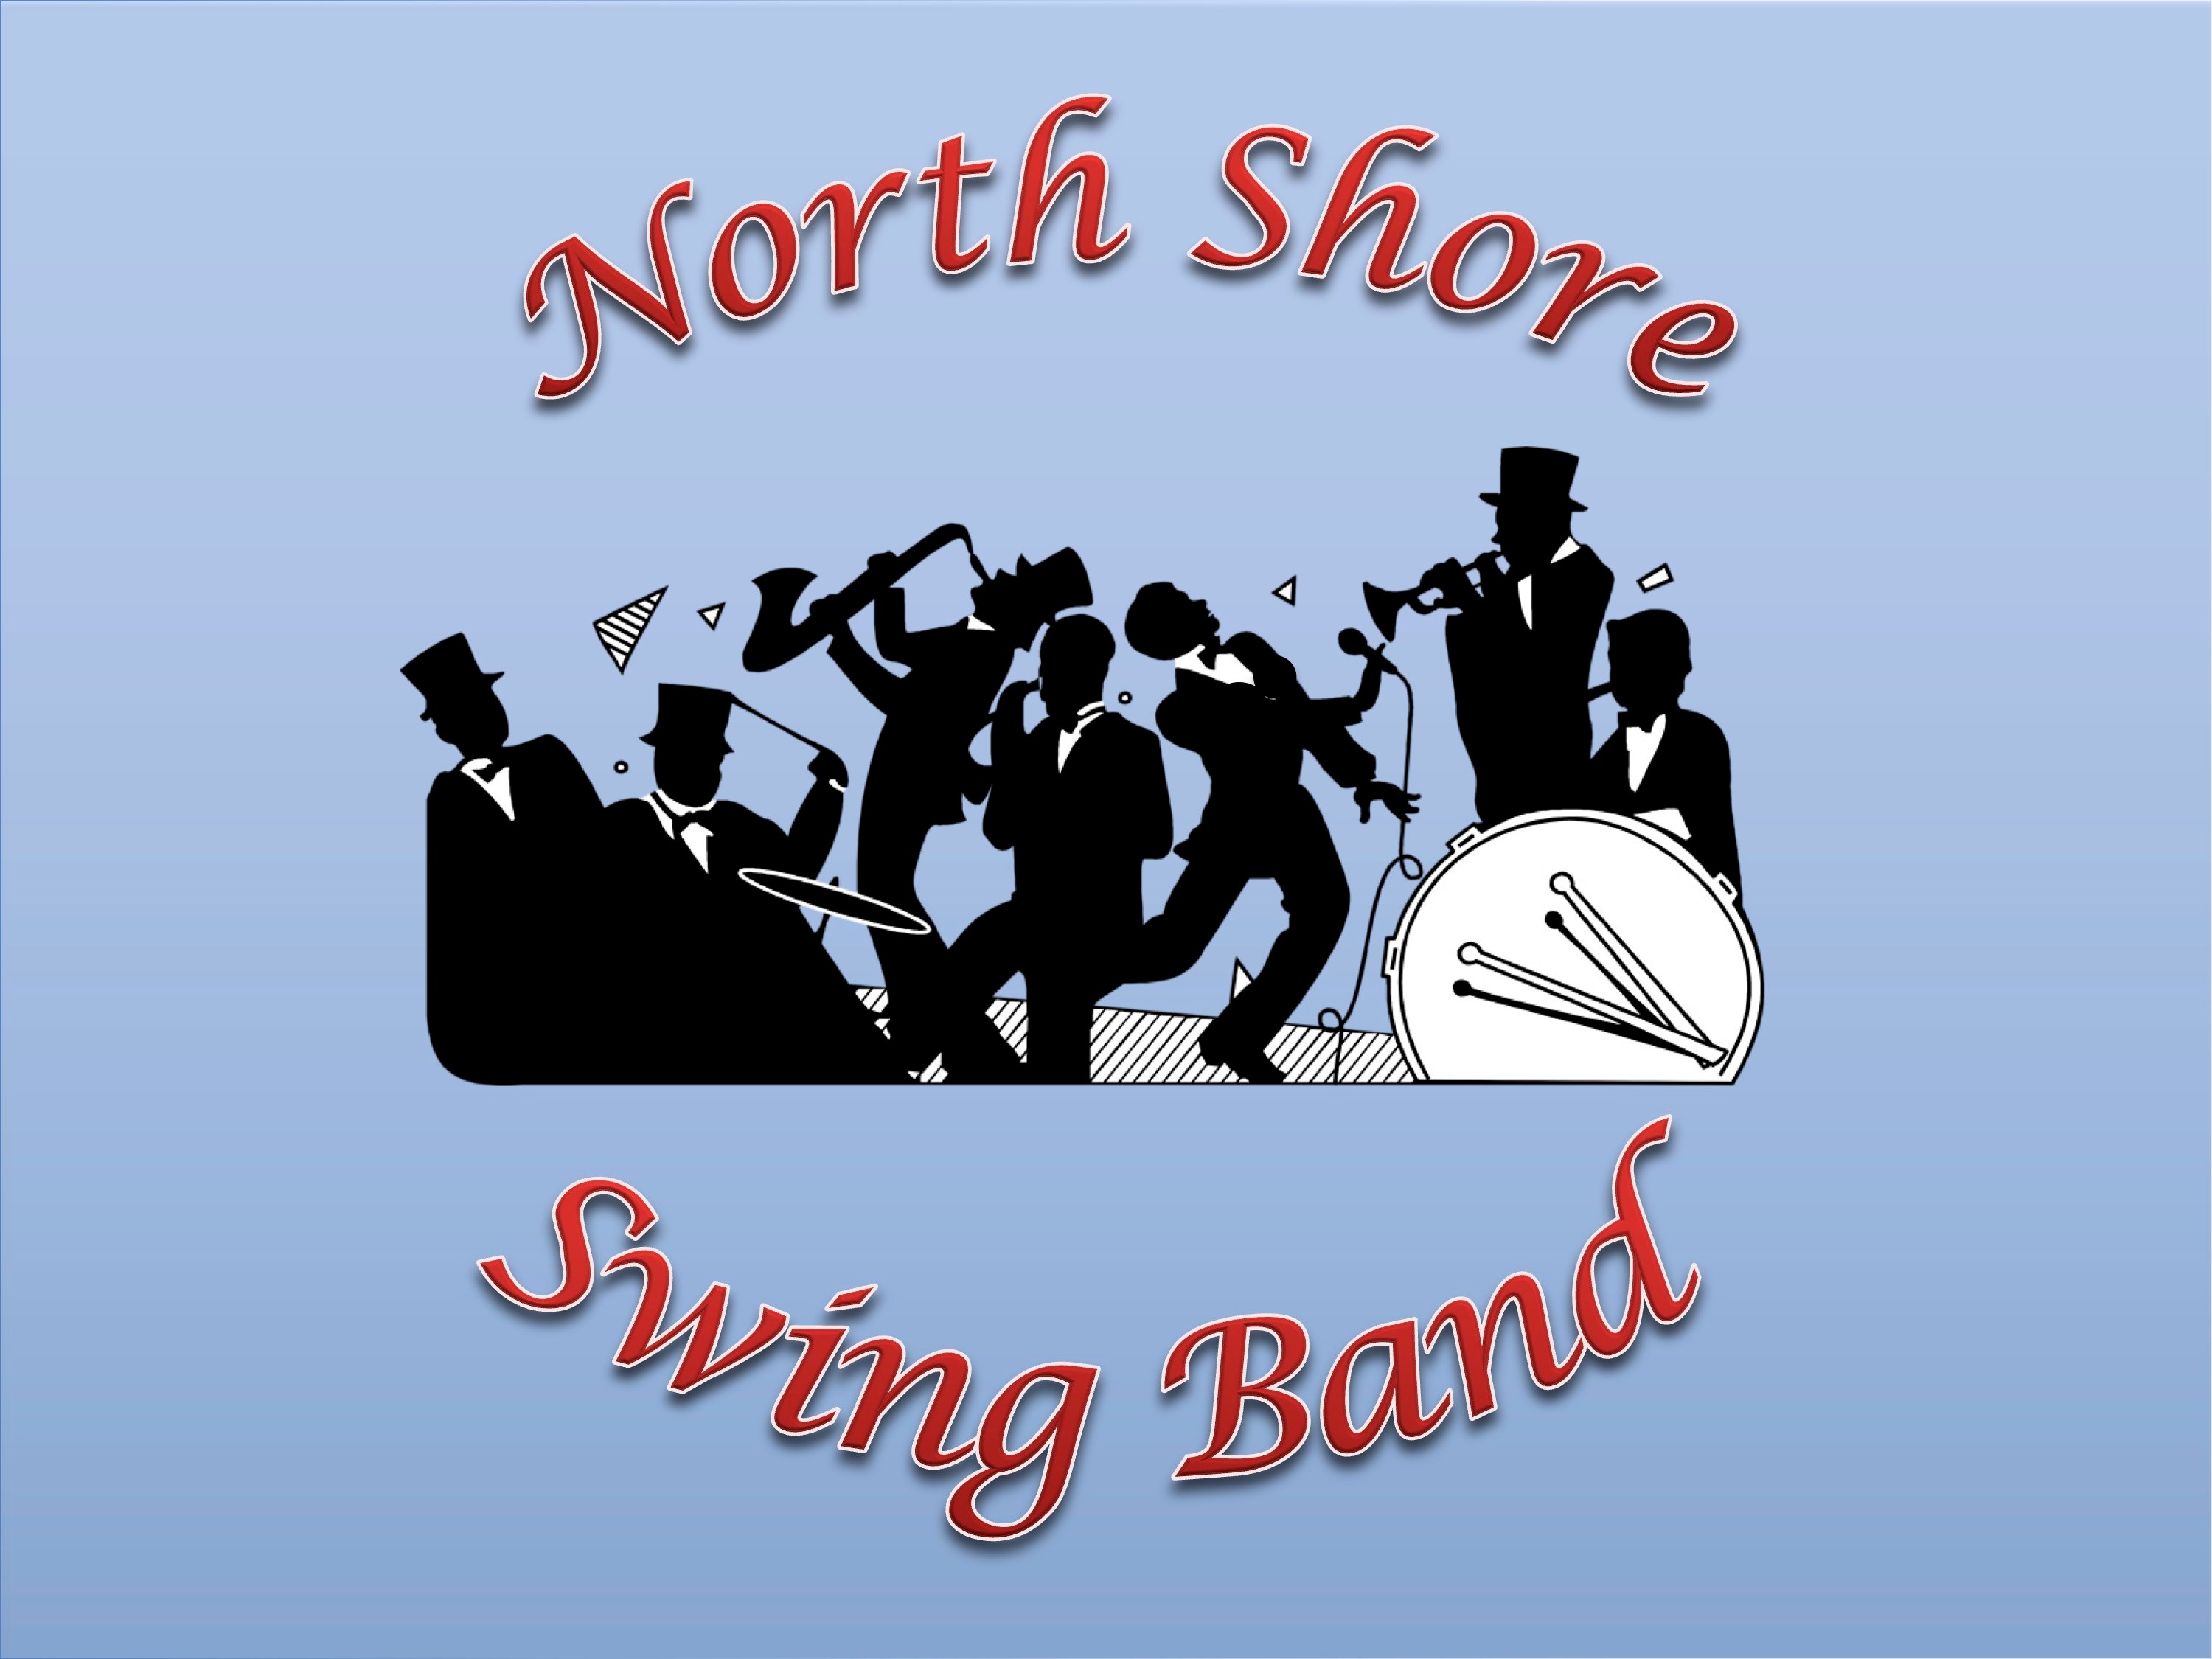 Third Thursday Jazz North Shore Swing Band pic